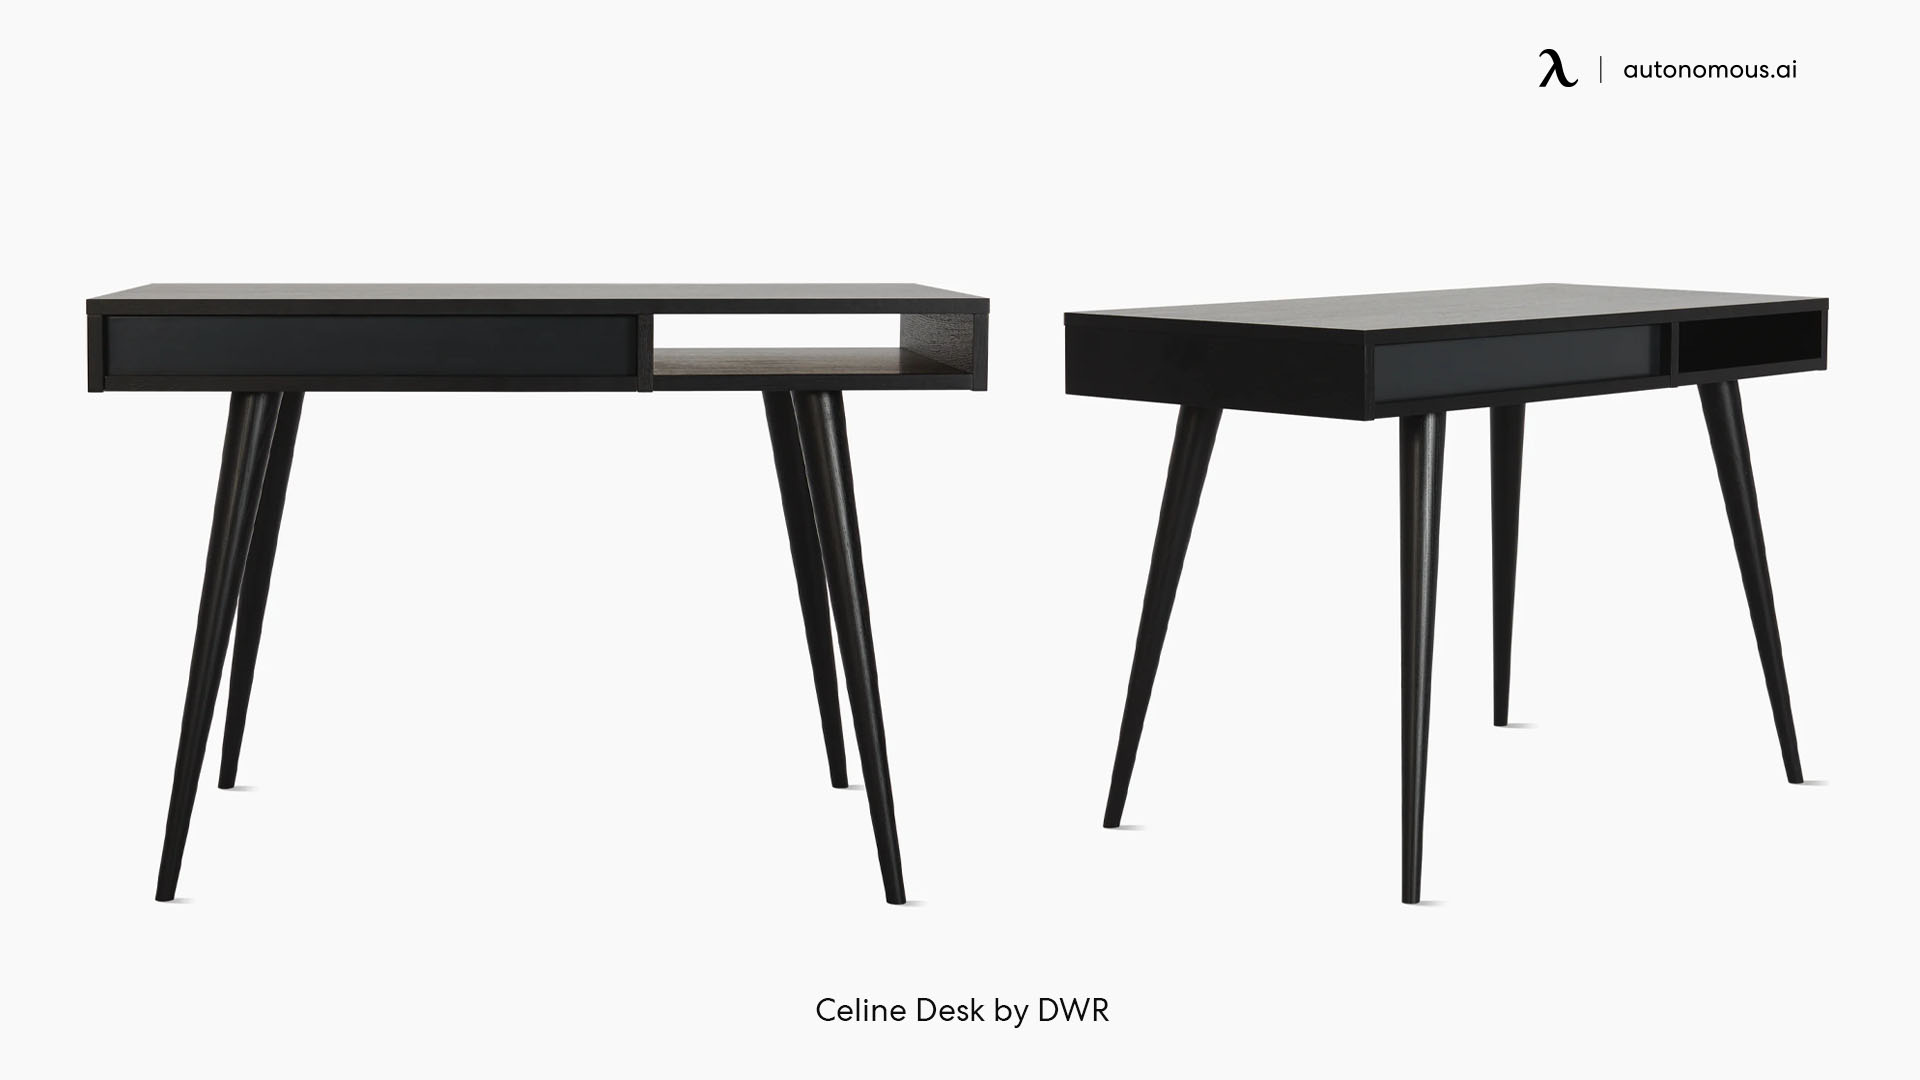 Celine large office desk by DWR